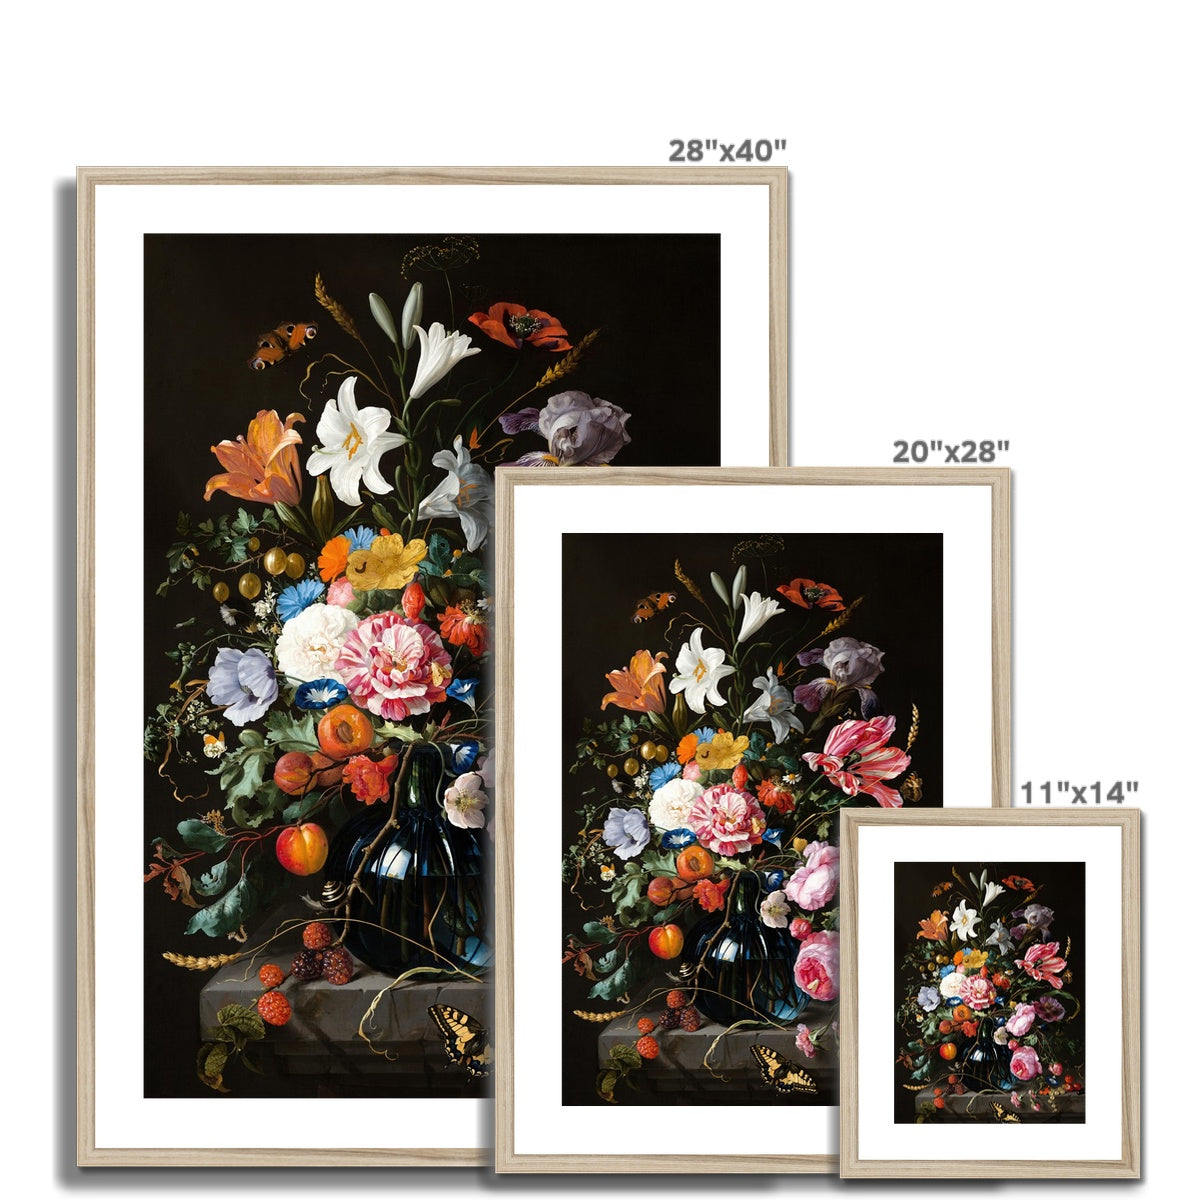 &#39;Vase of Flowers&#39; Still Life by Jan Davidsz de Heem. Framed Open Edition Fine Art Print. Historic Art